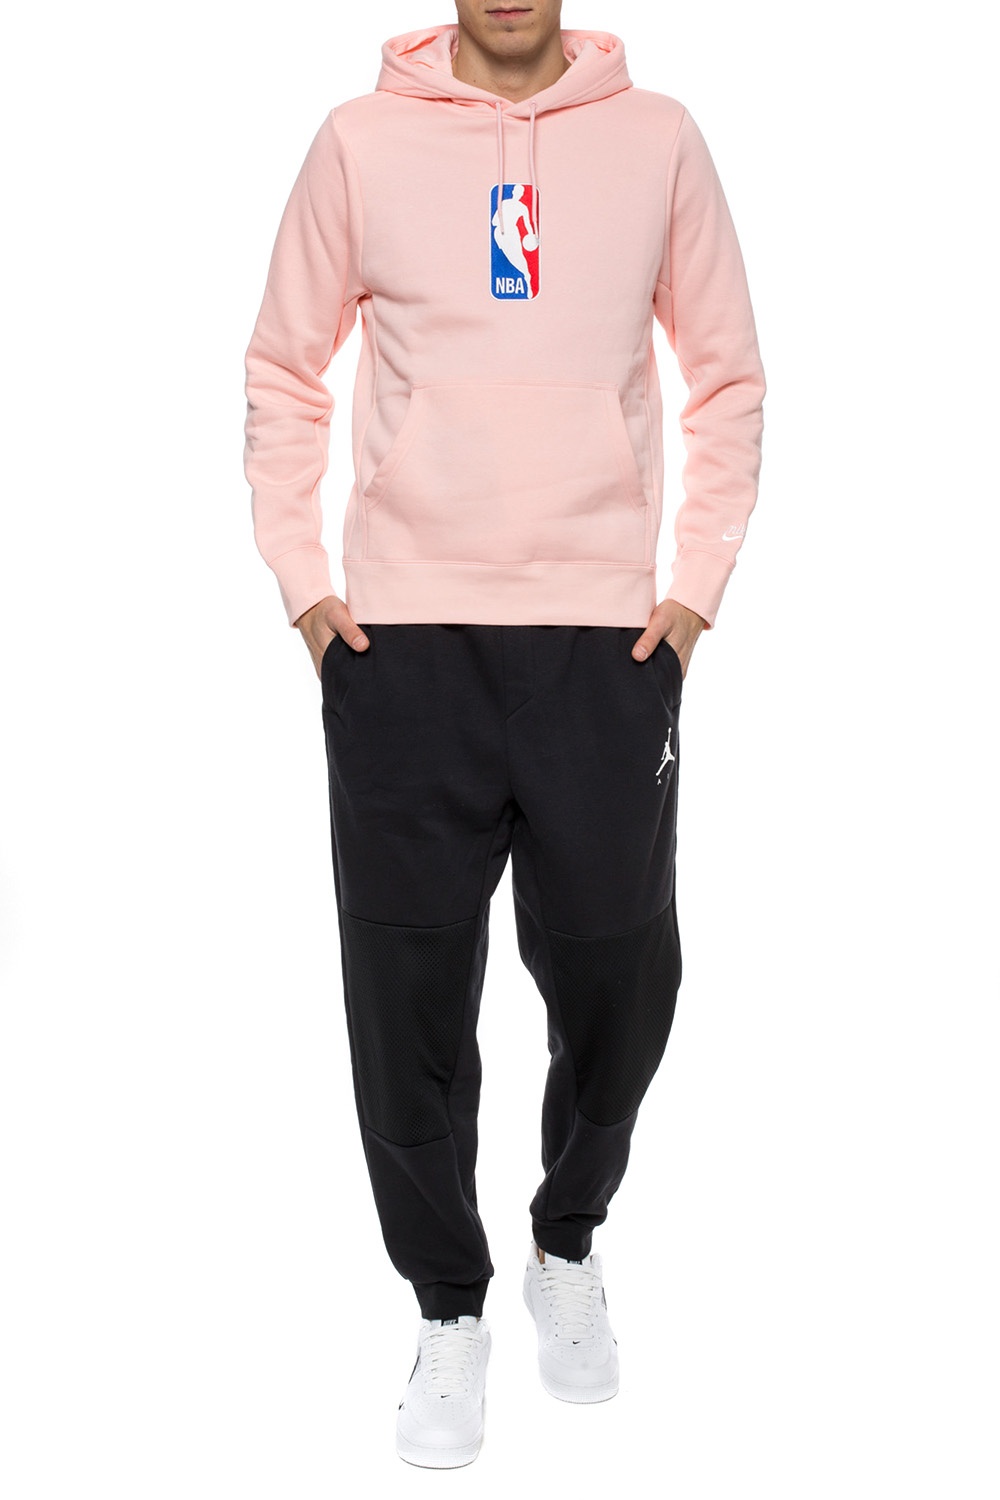 Nike SB X NBA Hoodie Icon Pink, 938412-646